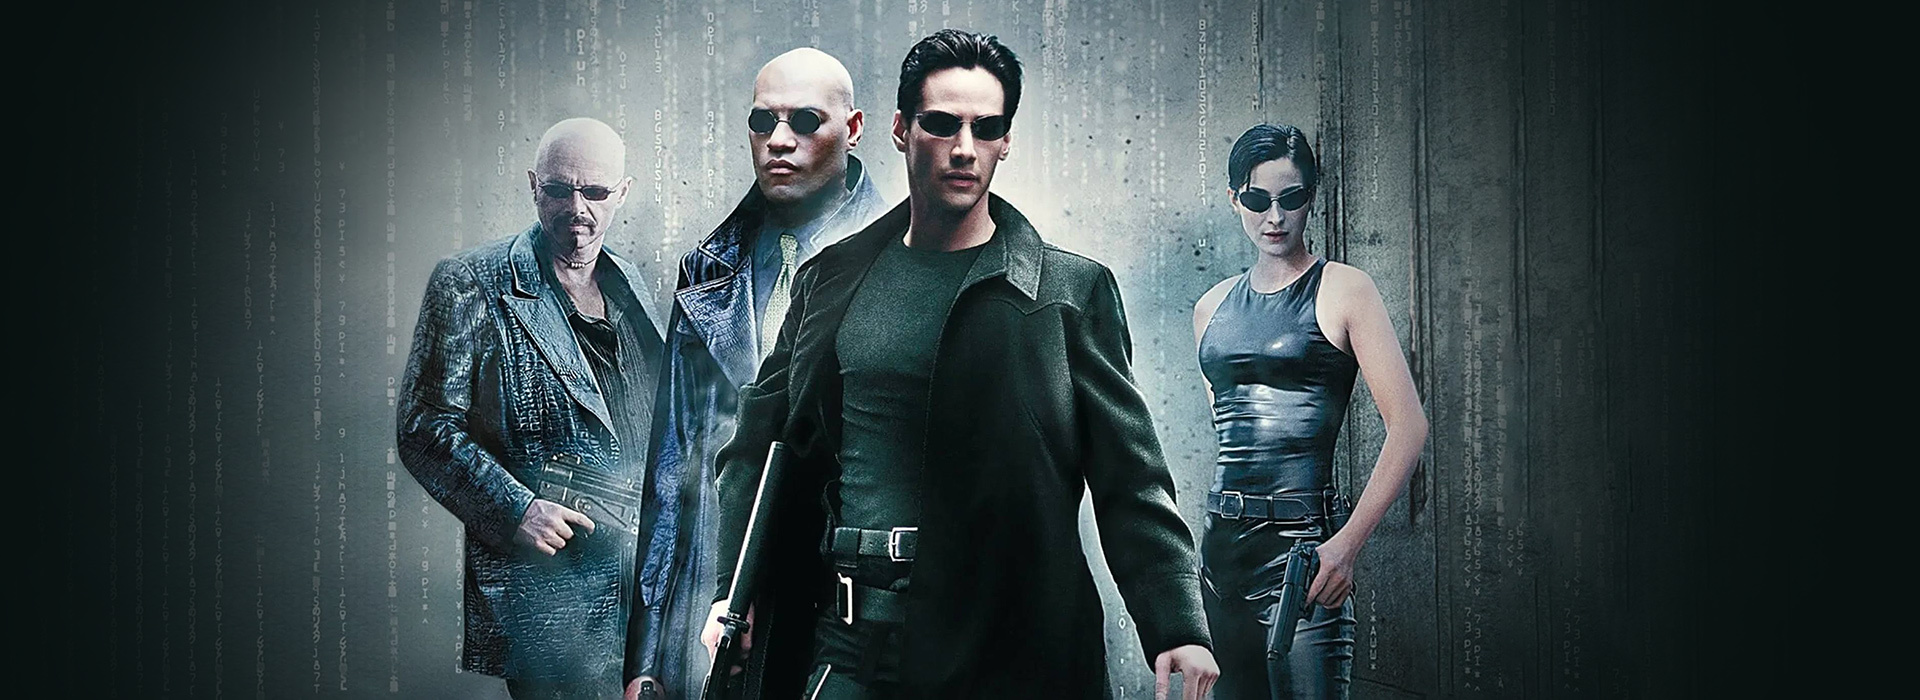 Movie poster The Matrix